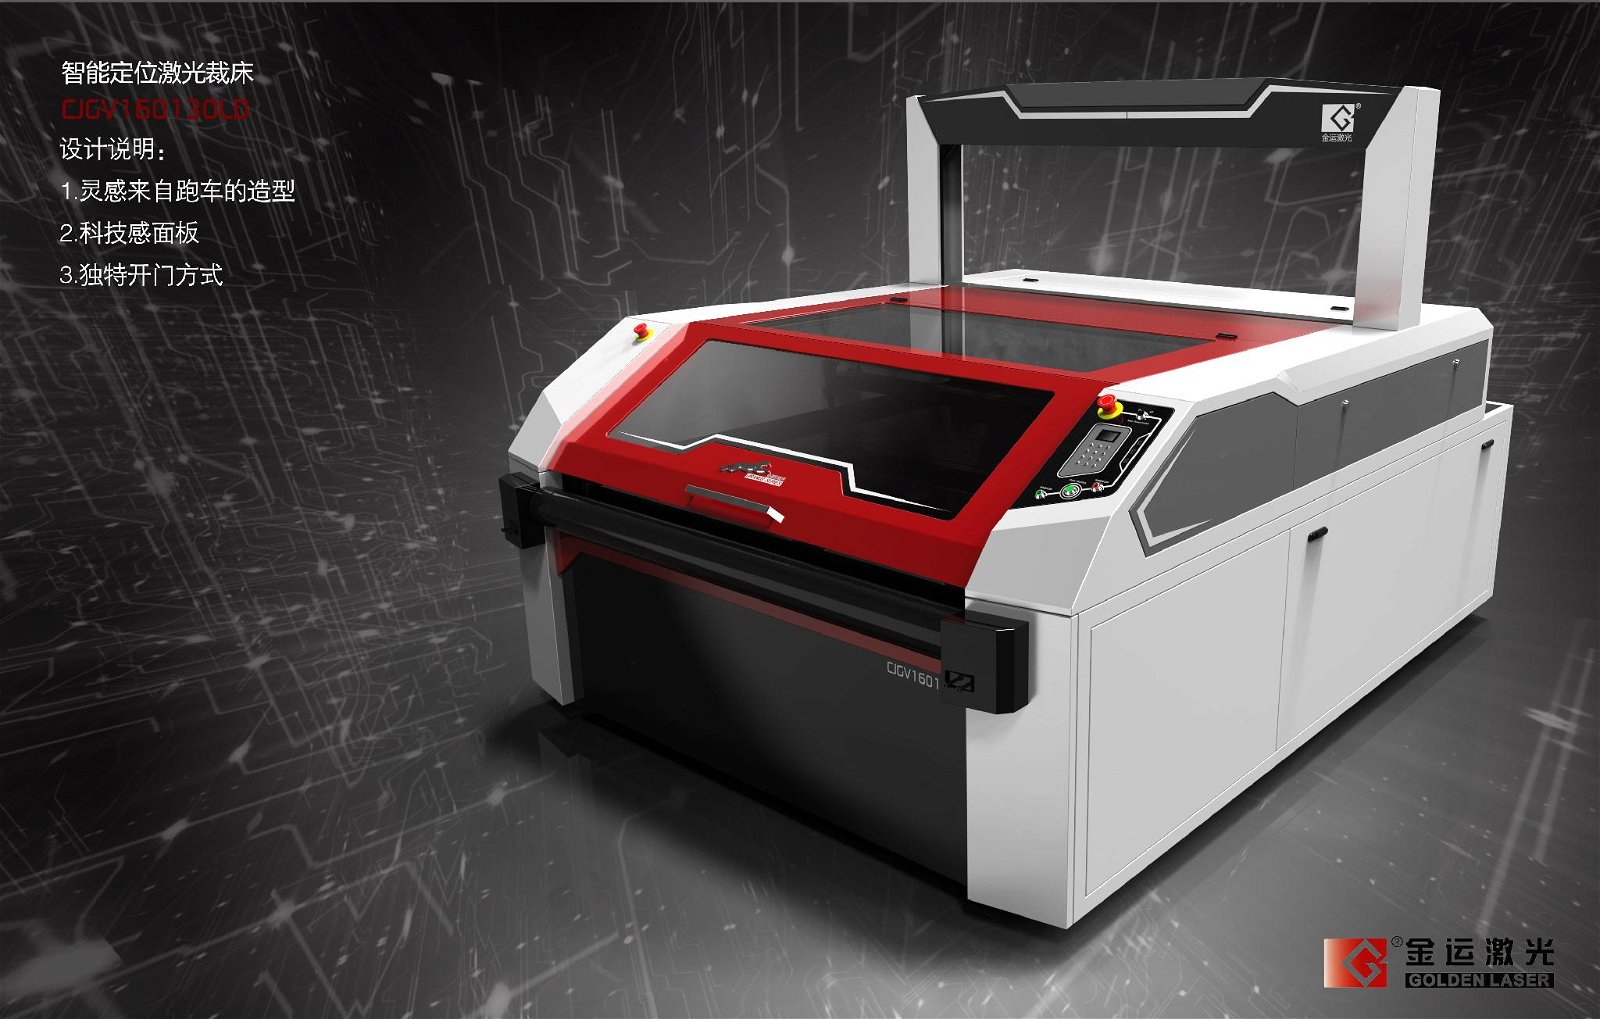 Auto Feeding Flying Scan Laser Cutting Machine for Printed Fabrics 4